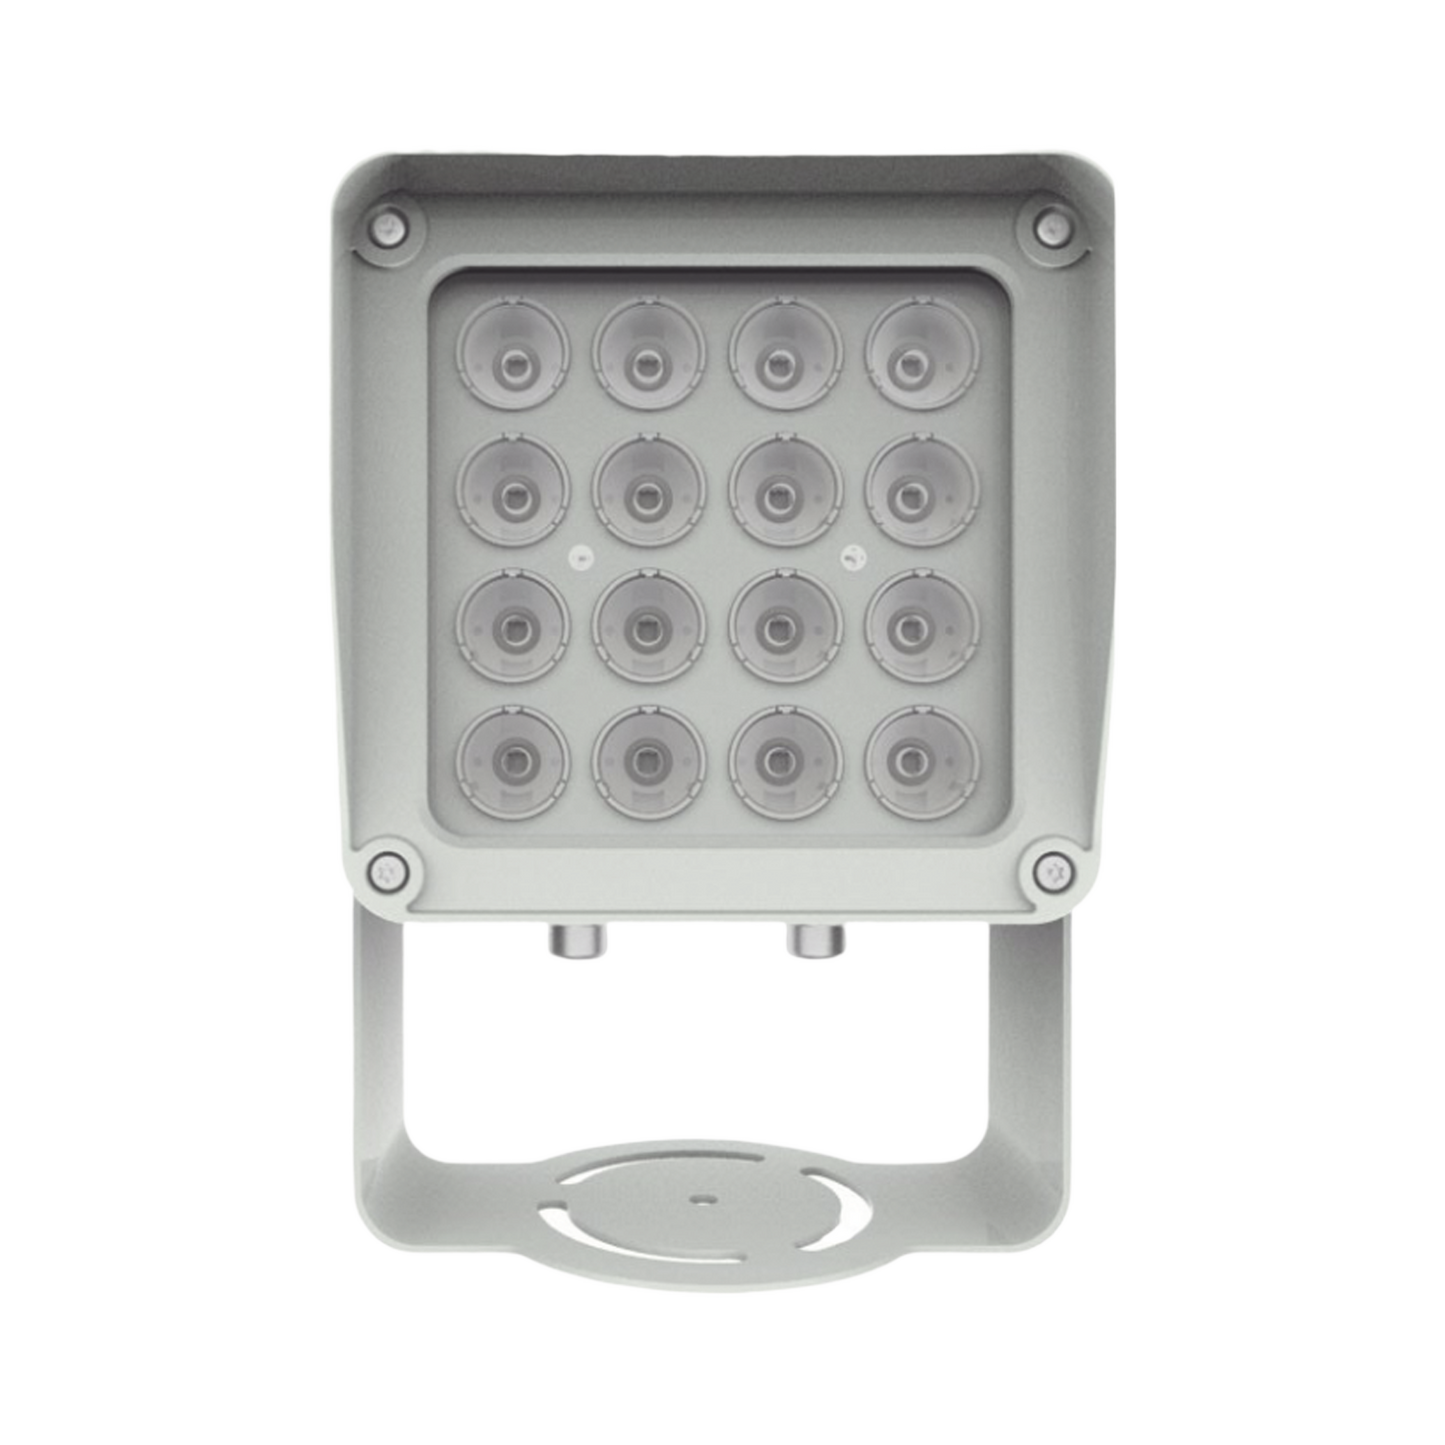 Lampara IR de Luz Estroboscópica / 16 Lámaras LED / Distancia Efectiva 16 a 25 Metros / Cobertura 10°